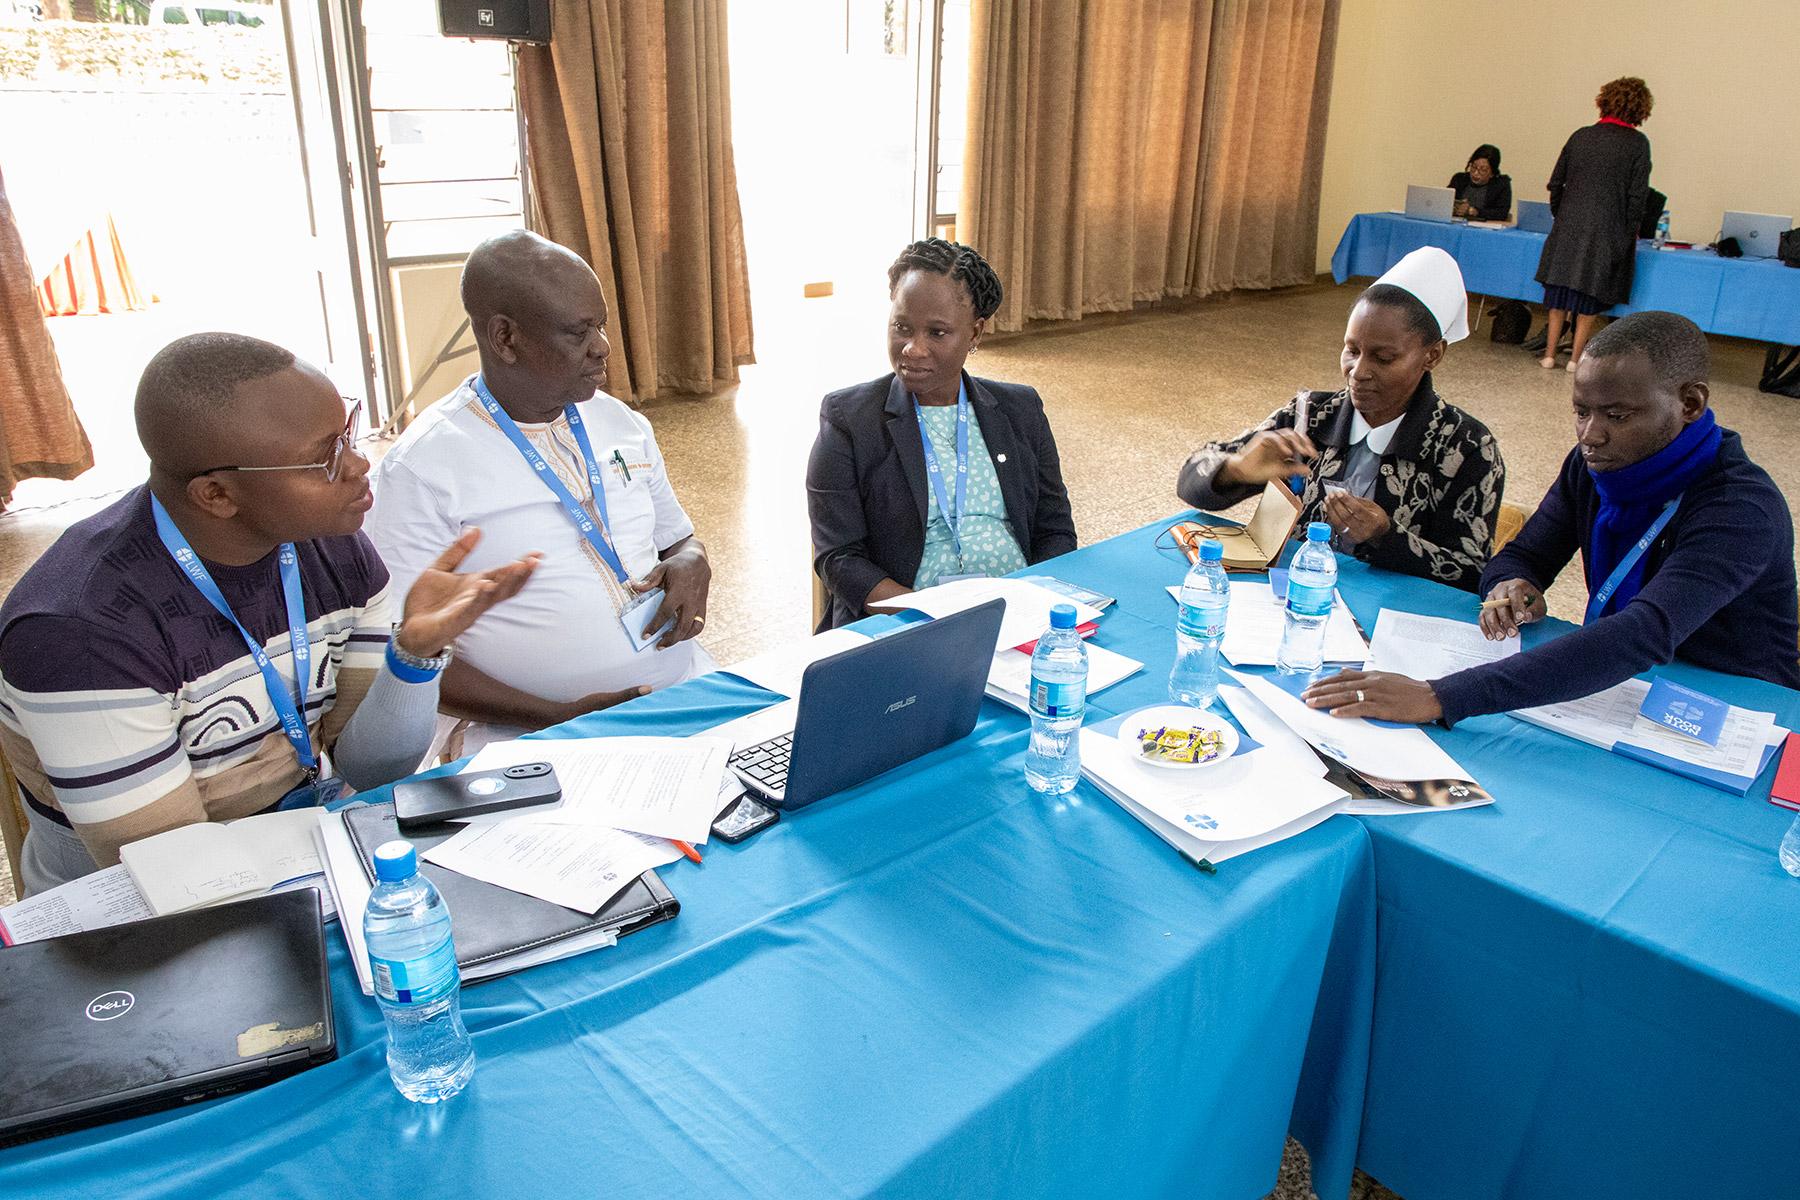 From left to right: Mr Maro Micah Maua, Rev. Titus Bere Komora (KELC); Ms Anna Nyumba, Sister Woinde Nkya (ELCT) and Mr Fred Nyamwigema (Lutheran Church of Rwanda) in a group discussion.